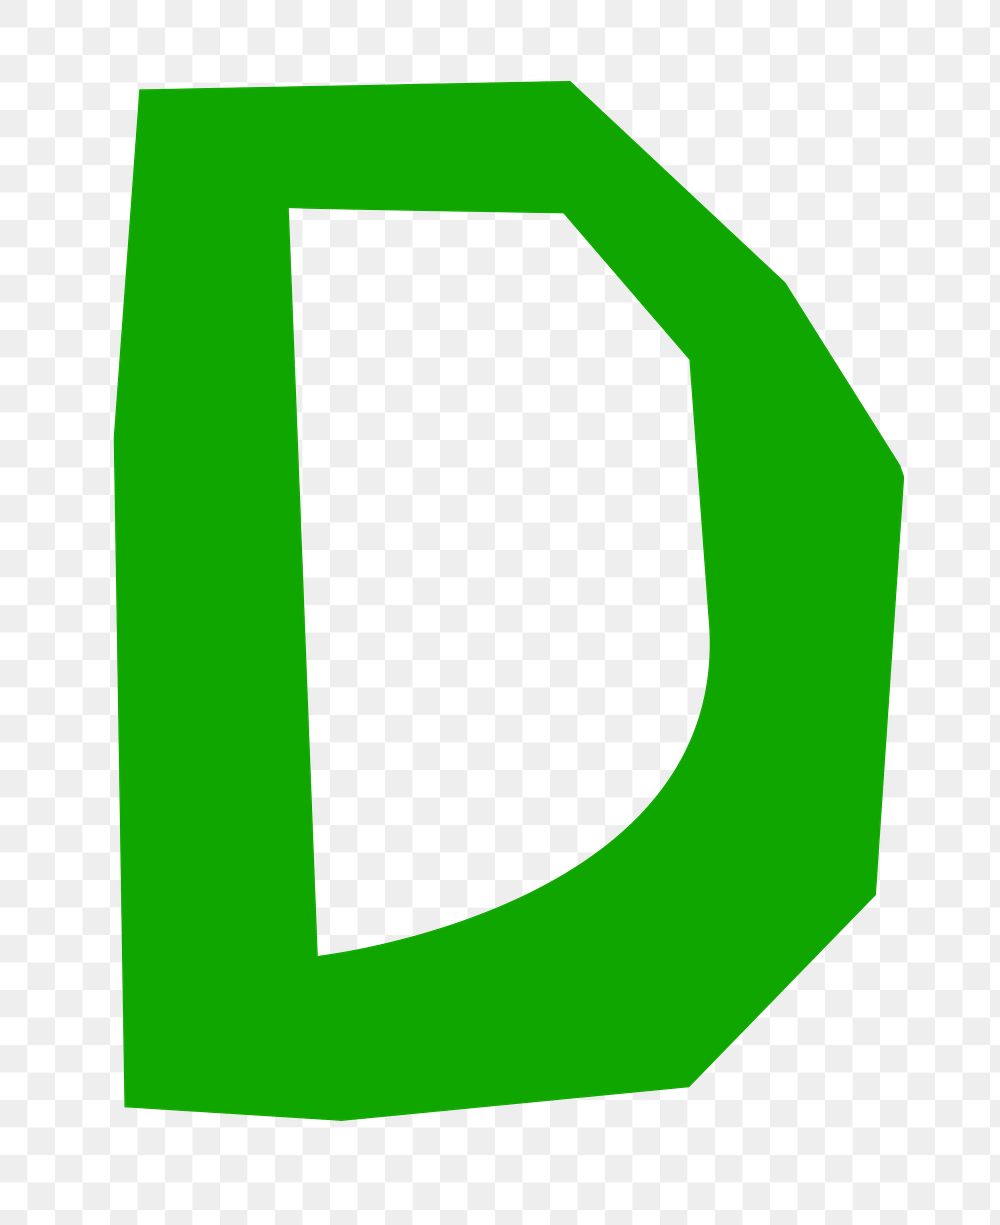 Letter D png in green paper cut shape font, transparent background